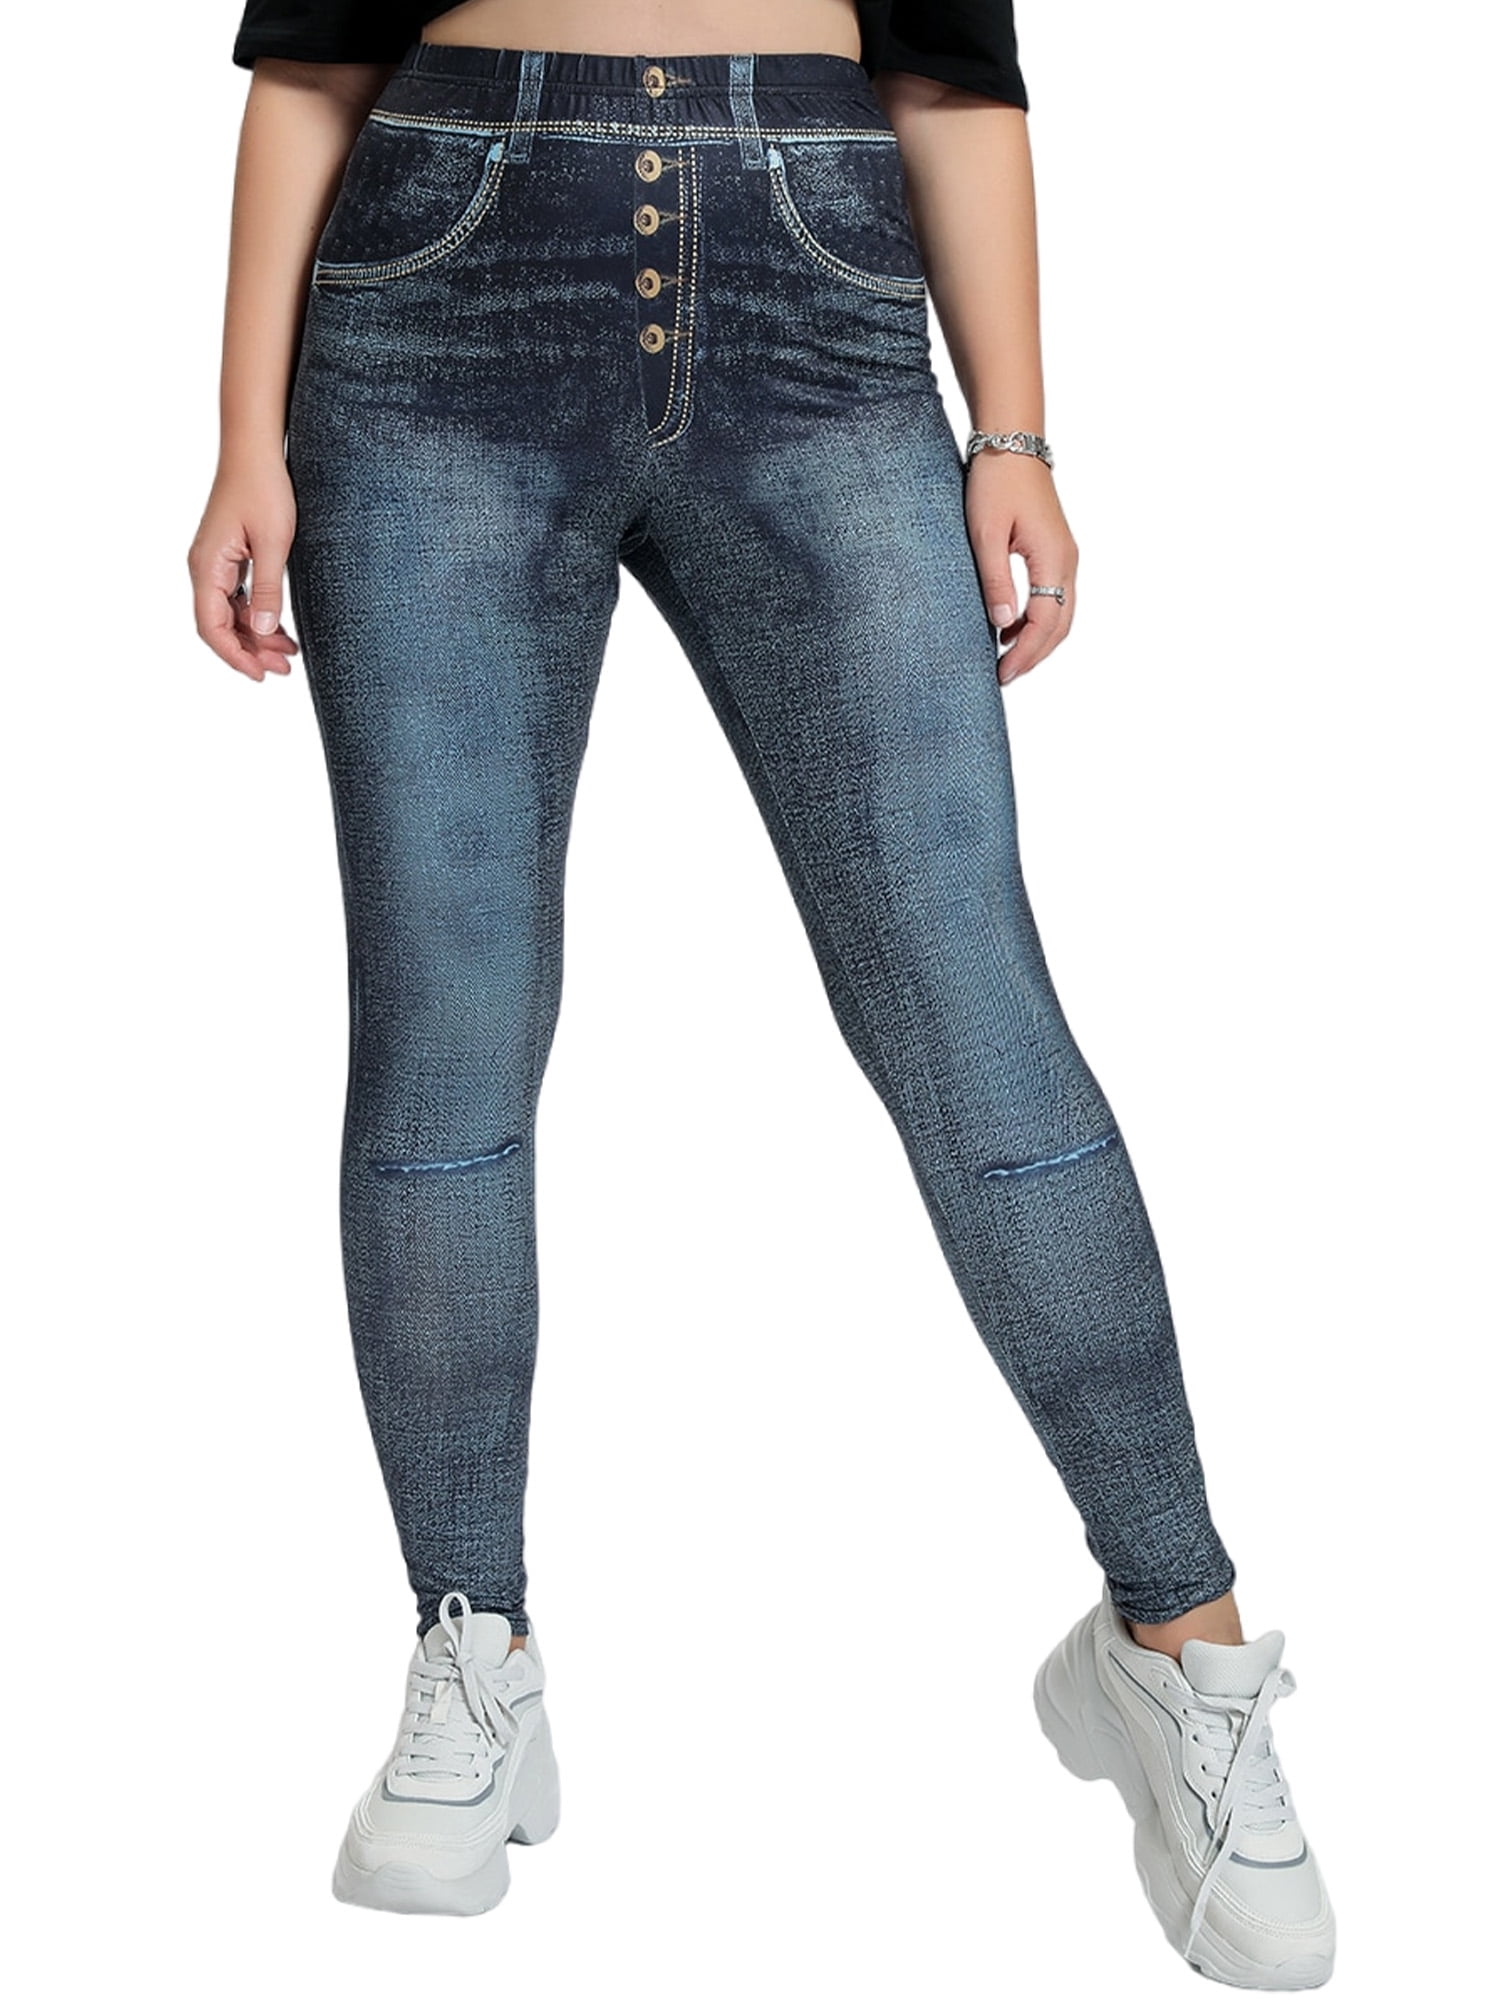 Frontwalk Plus Size Fake Jeans Pants For Women Denim Leggings High